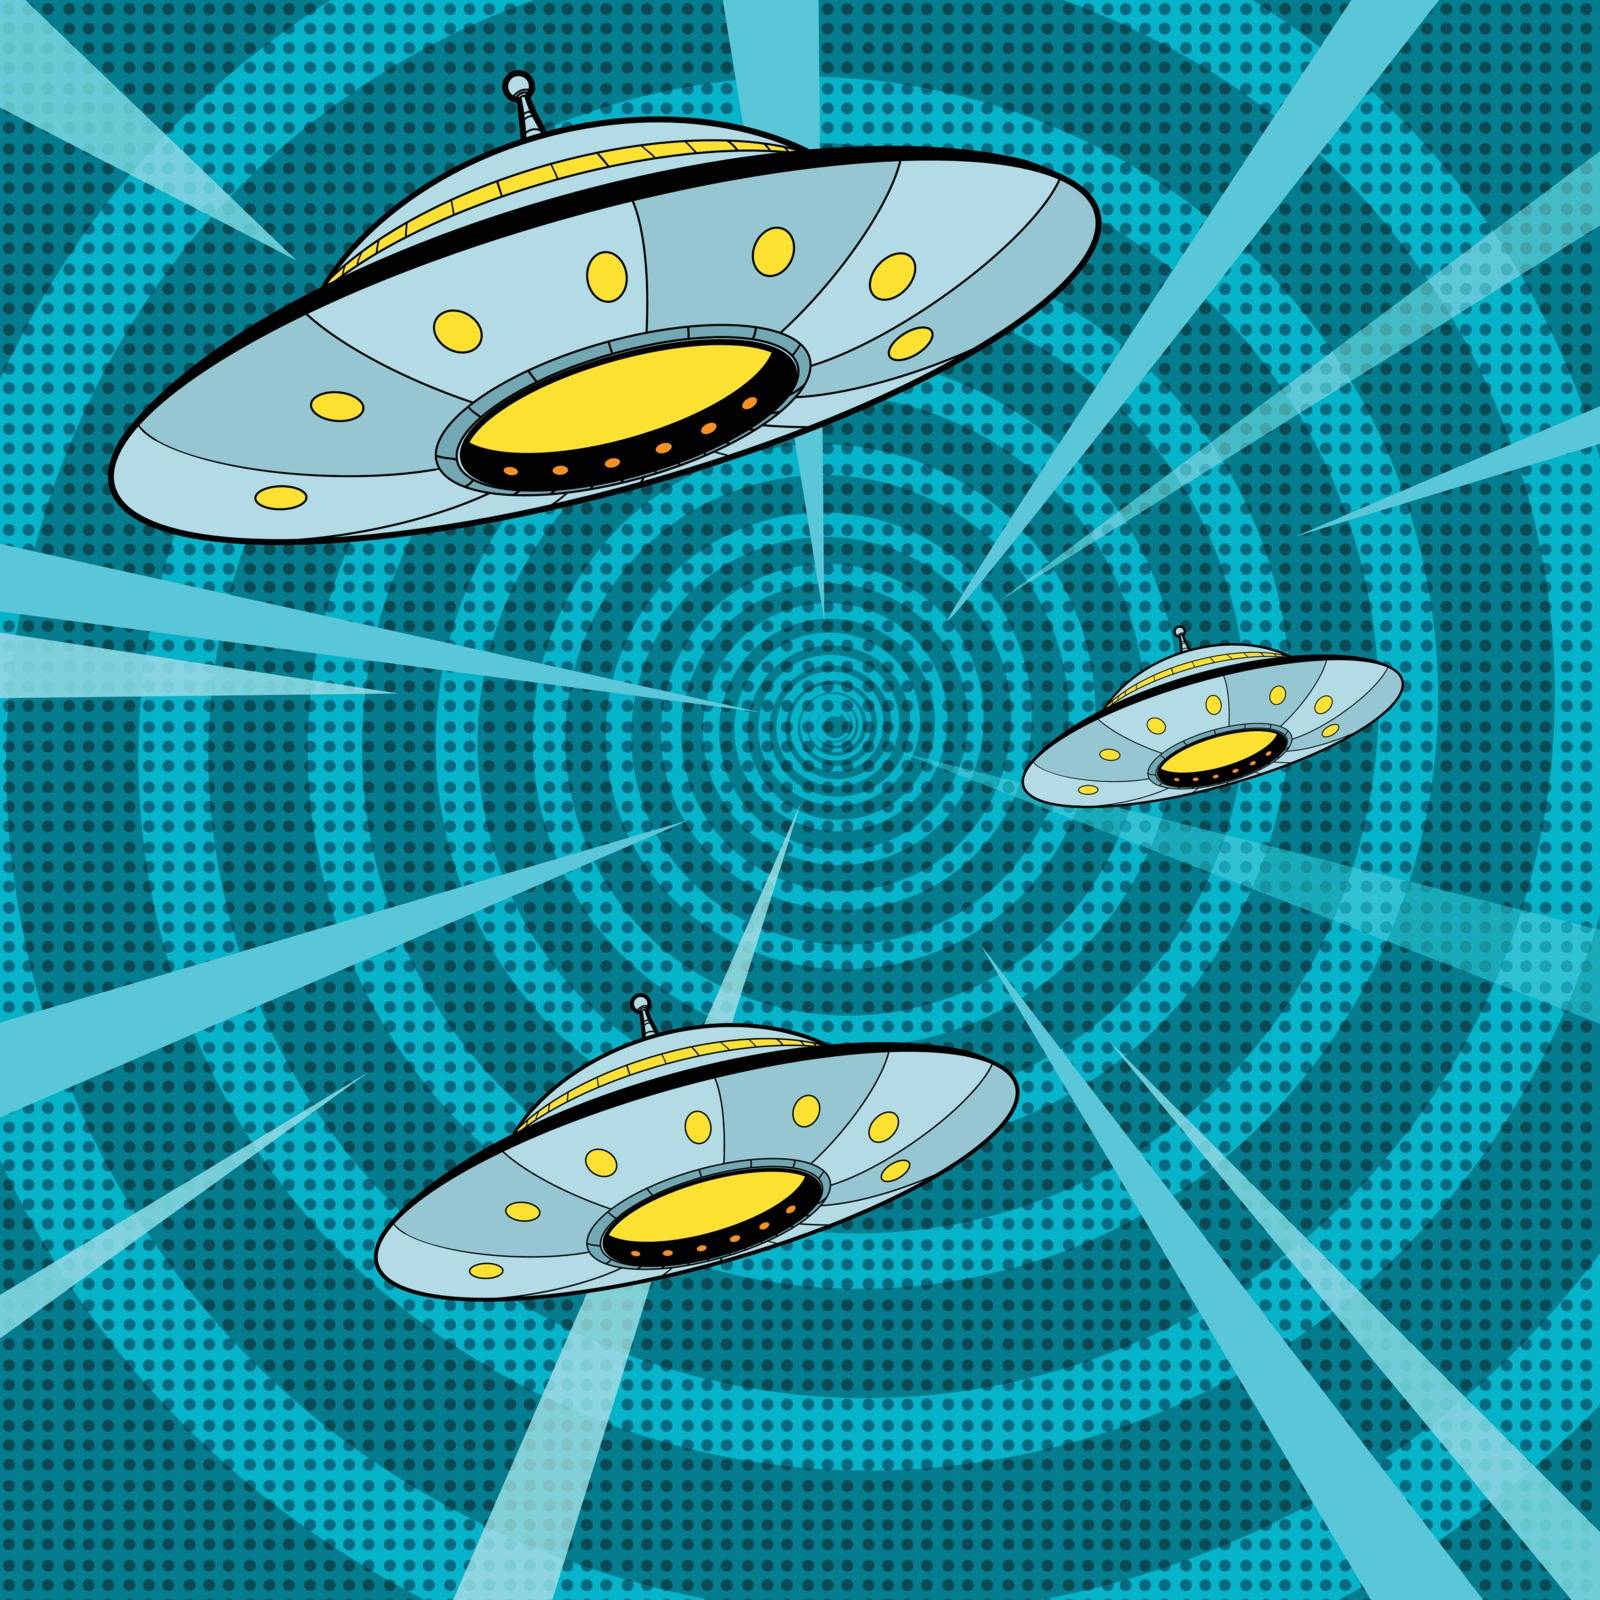 Space attack UFO by studiostoks